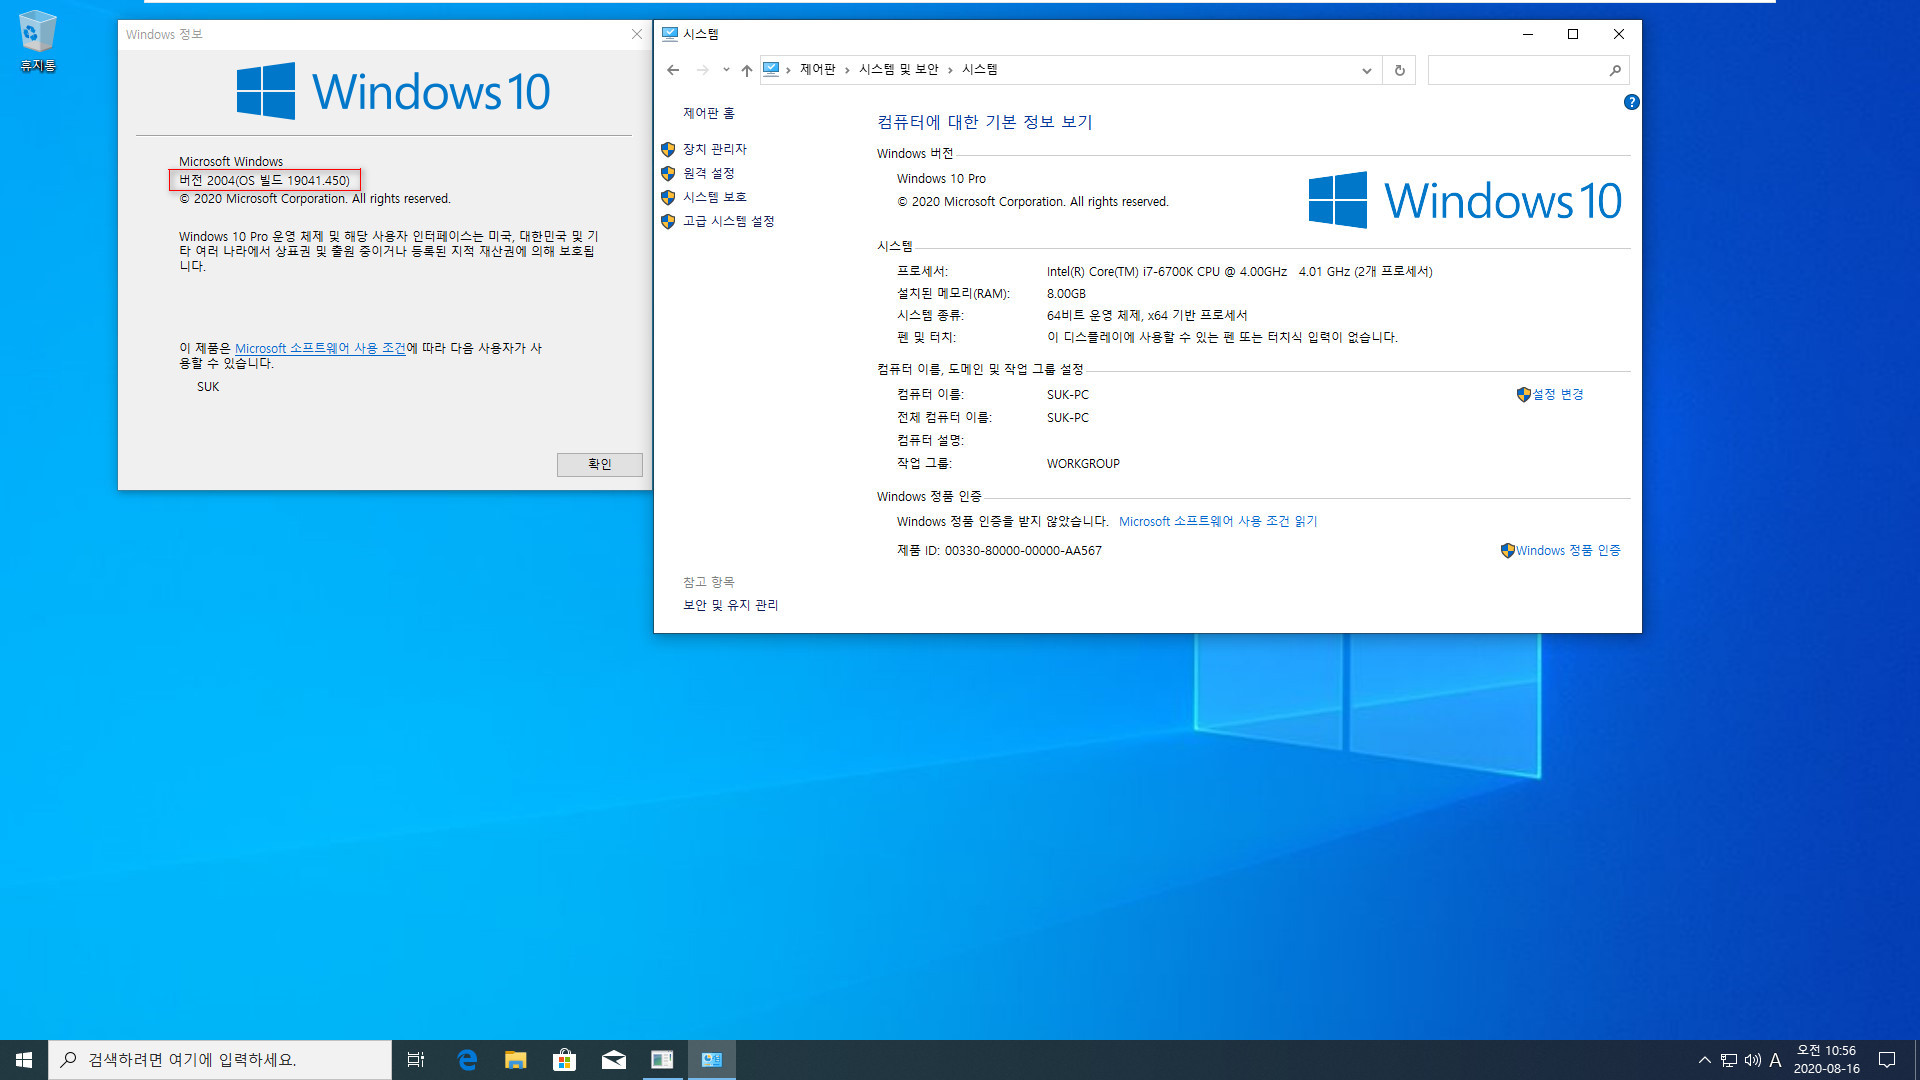 Windows 10 버전 20H2 (OS 빌드 19042.421) 베타 채널부터 새로운 시작 메뉴와 함께 시스템 속성이 설정의 정보로 뜹니다 - 정식 버전 2004 (OS 빌드 19041.450)까지도 시작 메뉴와 시스템 속성이 이전과 같습니다 2020-08-16_105642.jpg